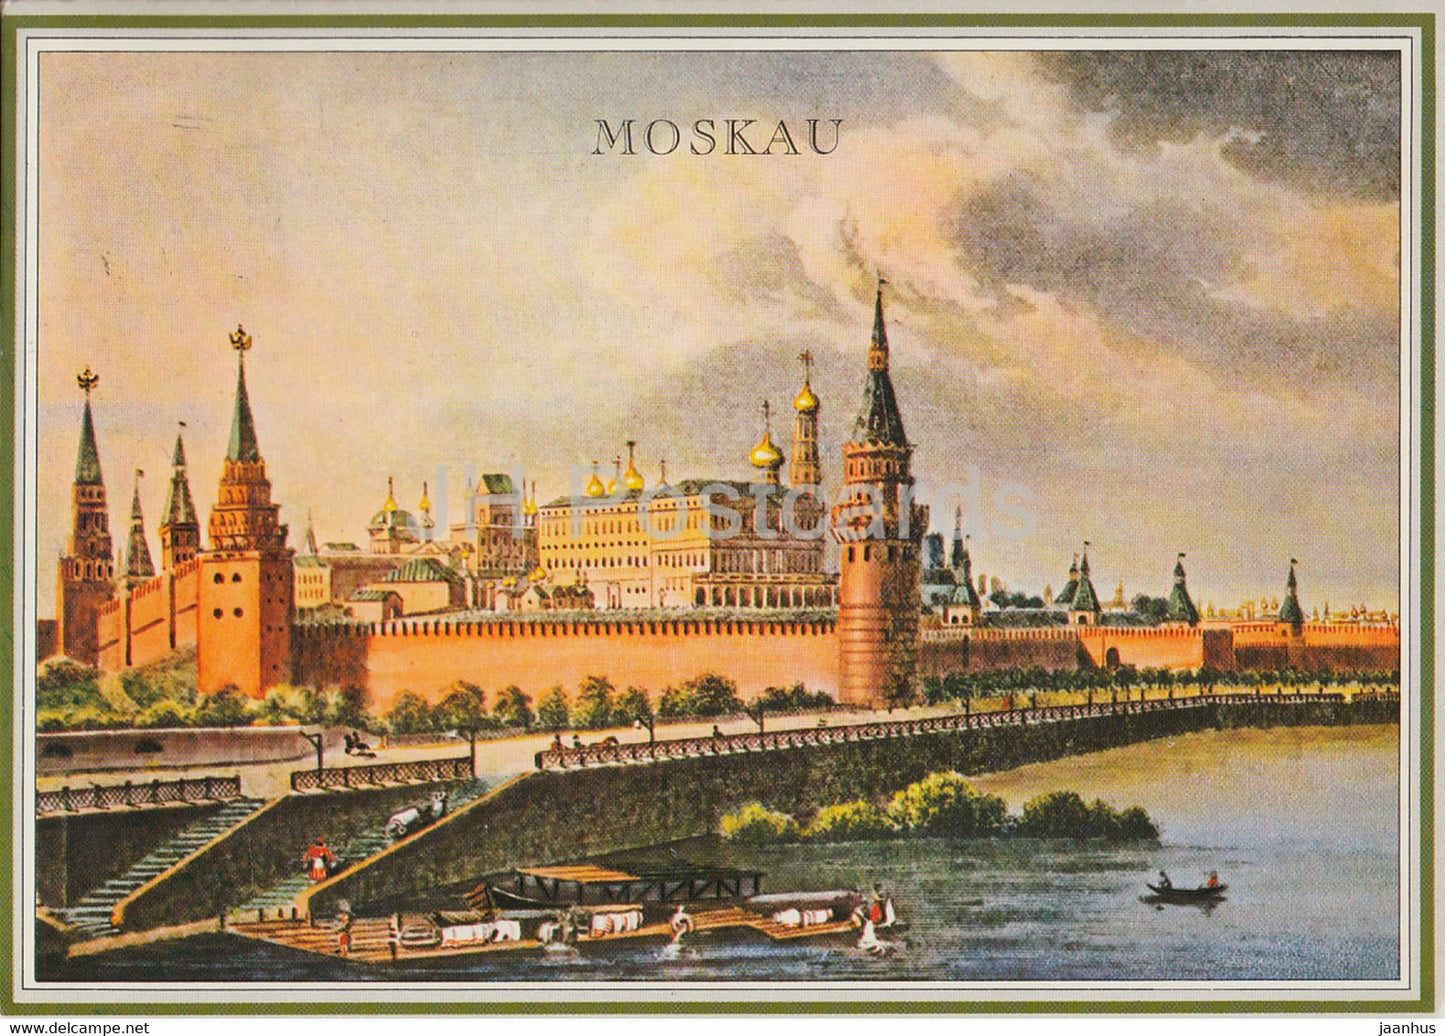 Moscow - Kremlin - 18 century painting - Moskau - Kreml von der Moskwa her gesehen - 1979 - Russia USSR - used - JH Postcards